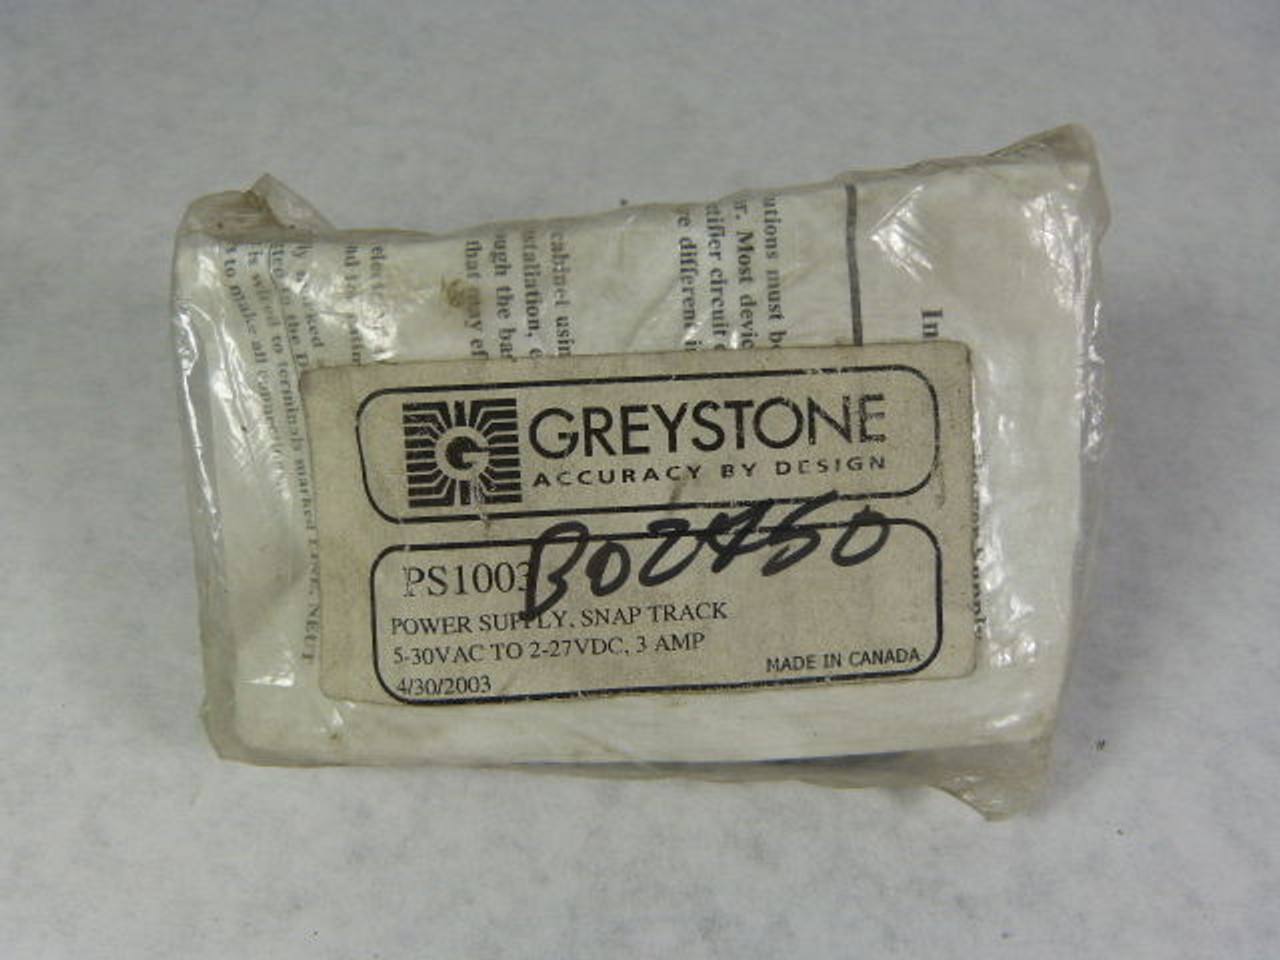 Greystone PS1003 Power Supply Snap Track NWB